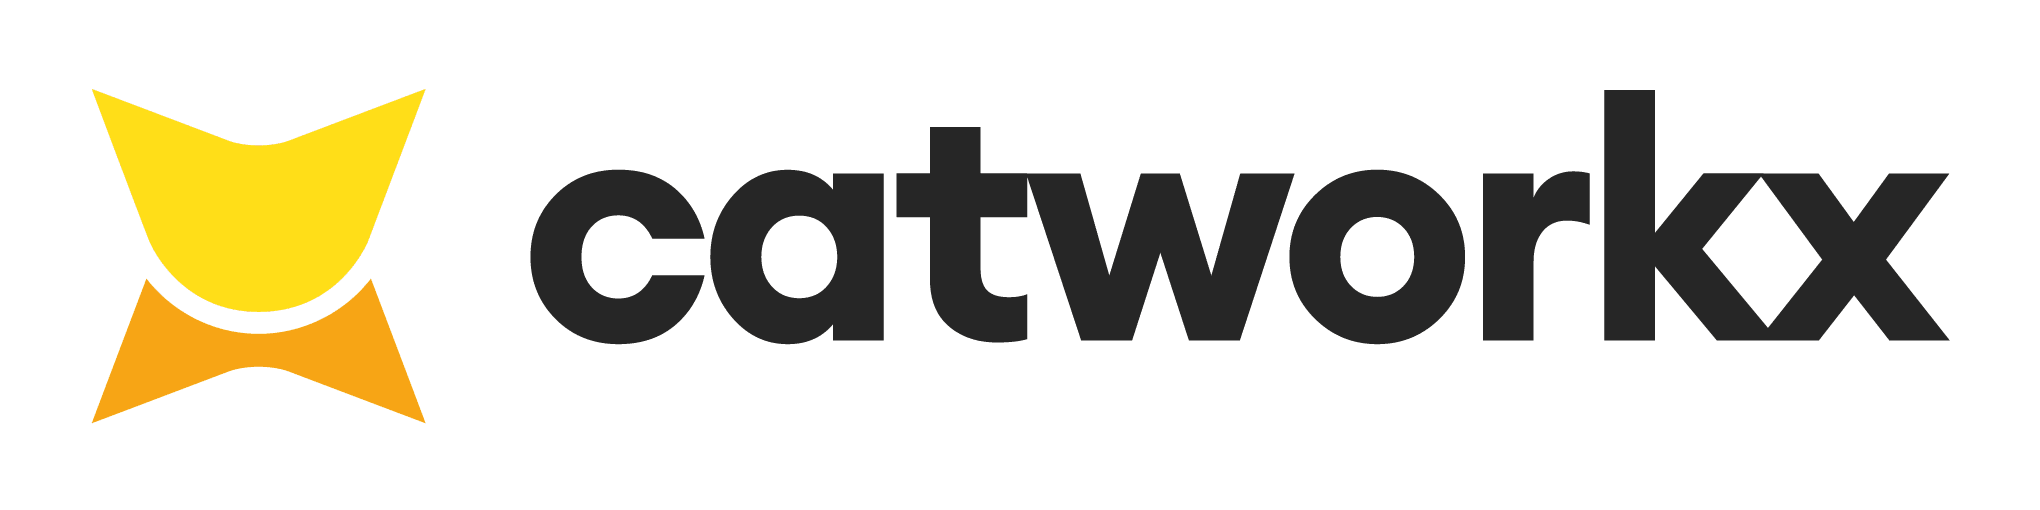 Catworkx logo